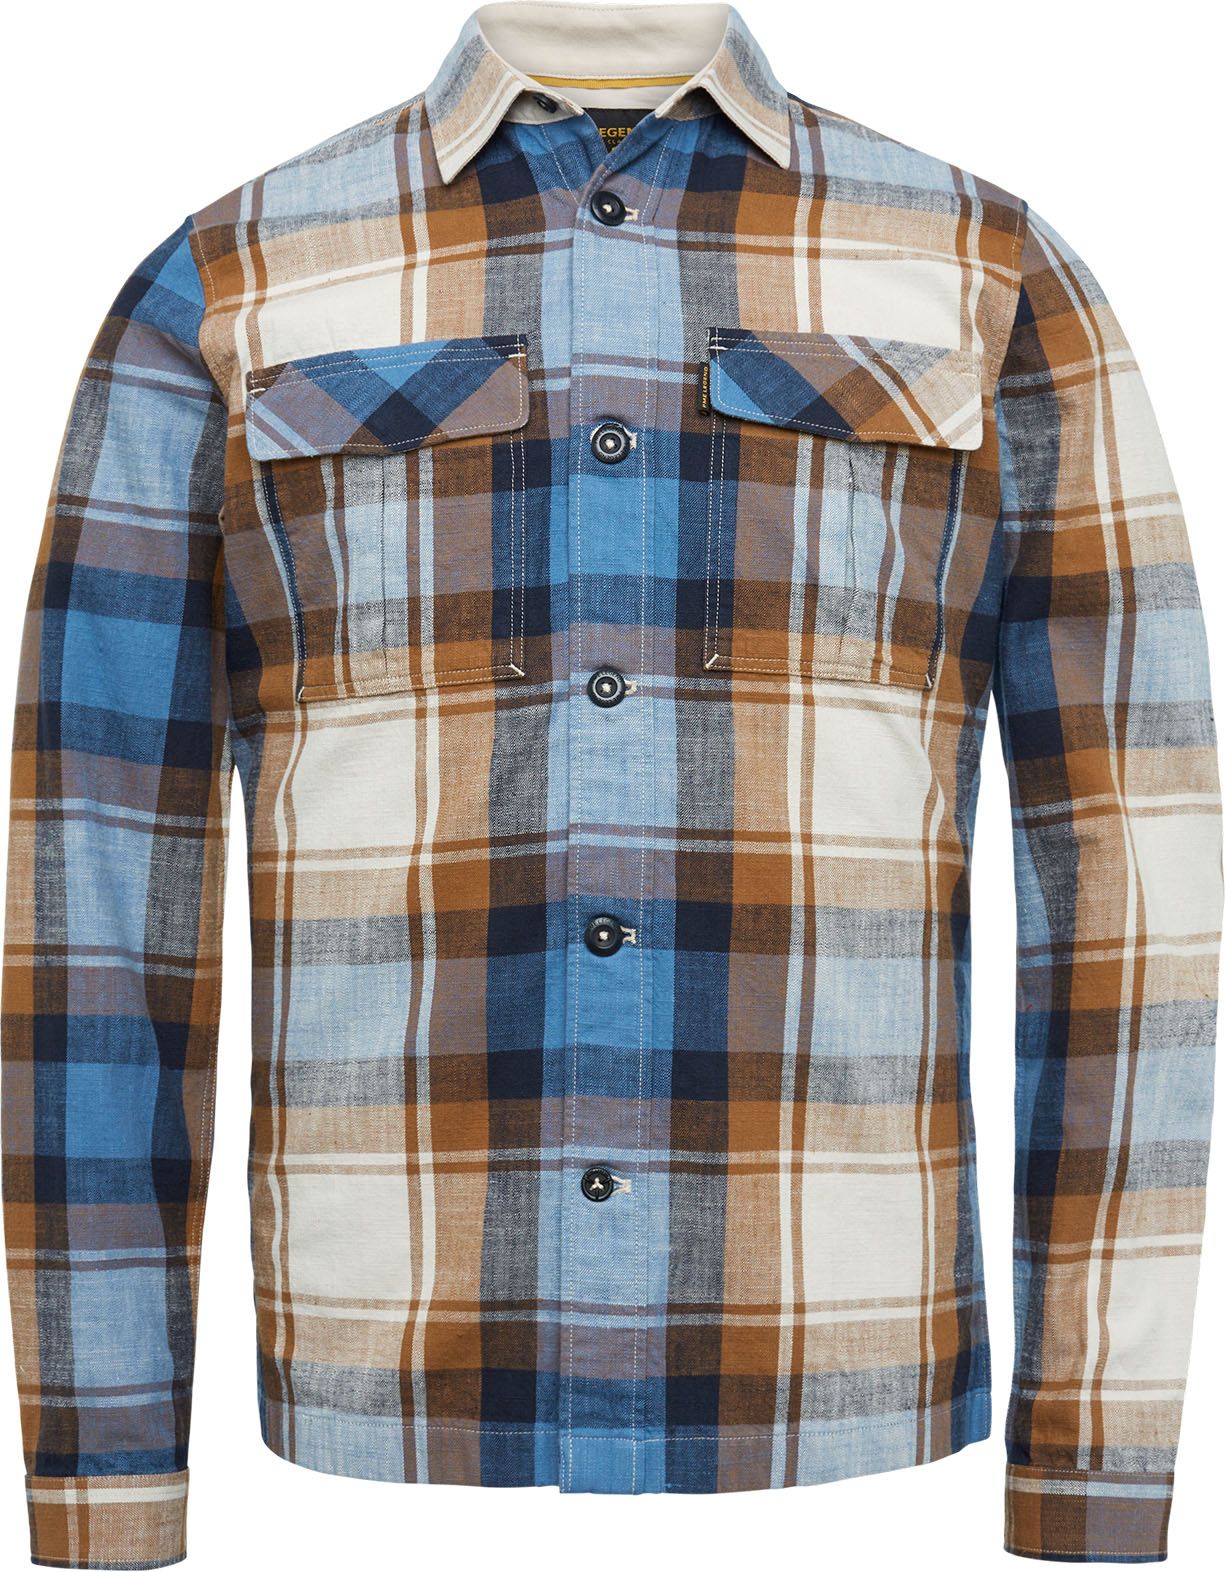 PME Legend Shirt Checkered Blue Multicolour Brown size XL